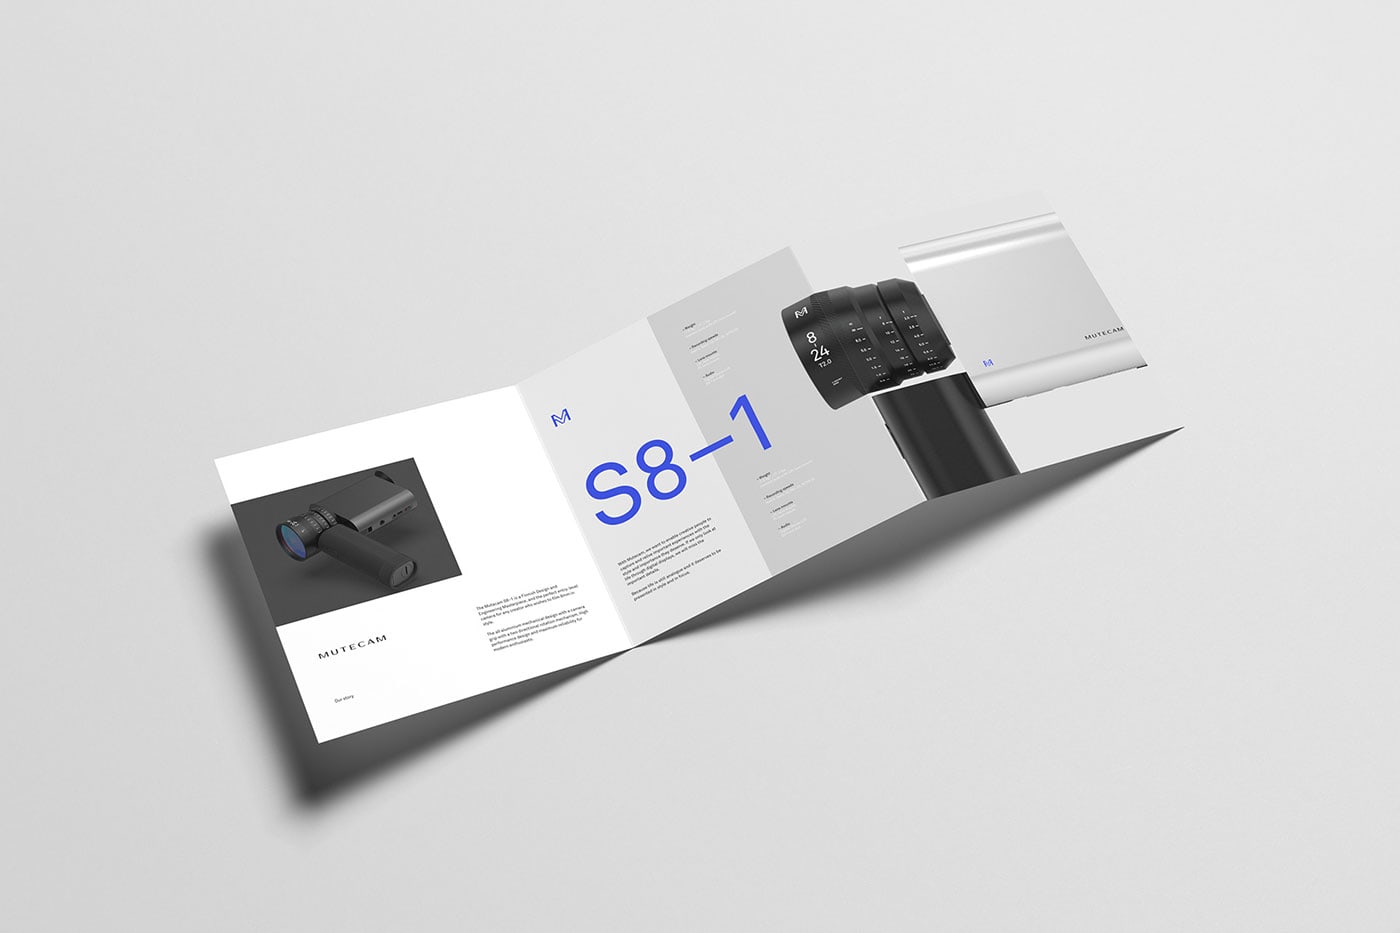 Mutecam S8–1摄像机品牌和包装设计